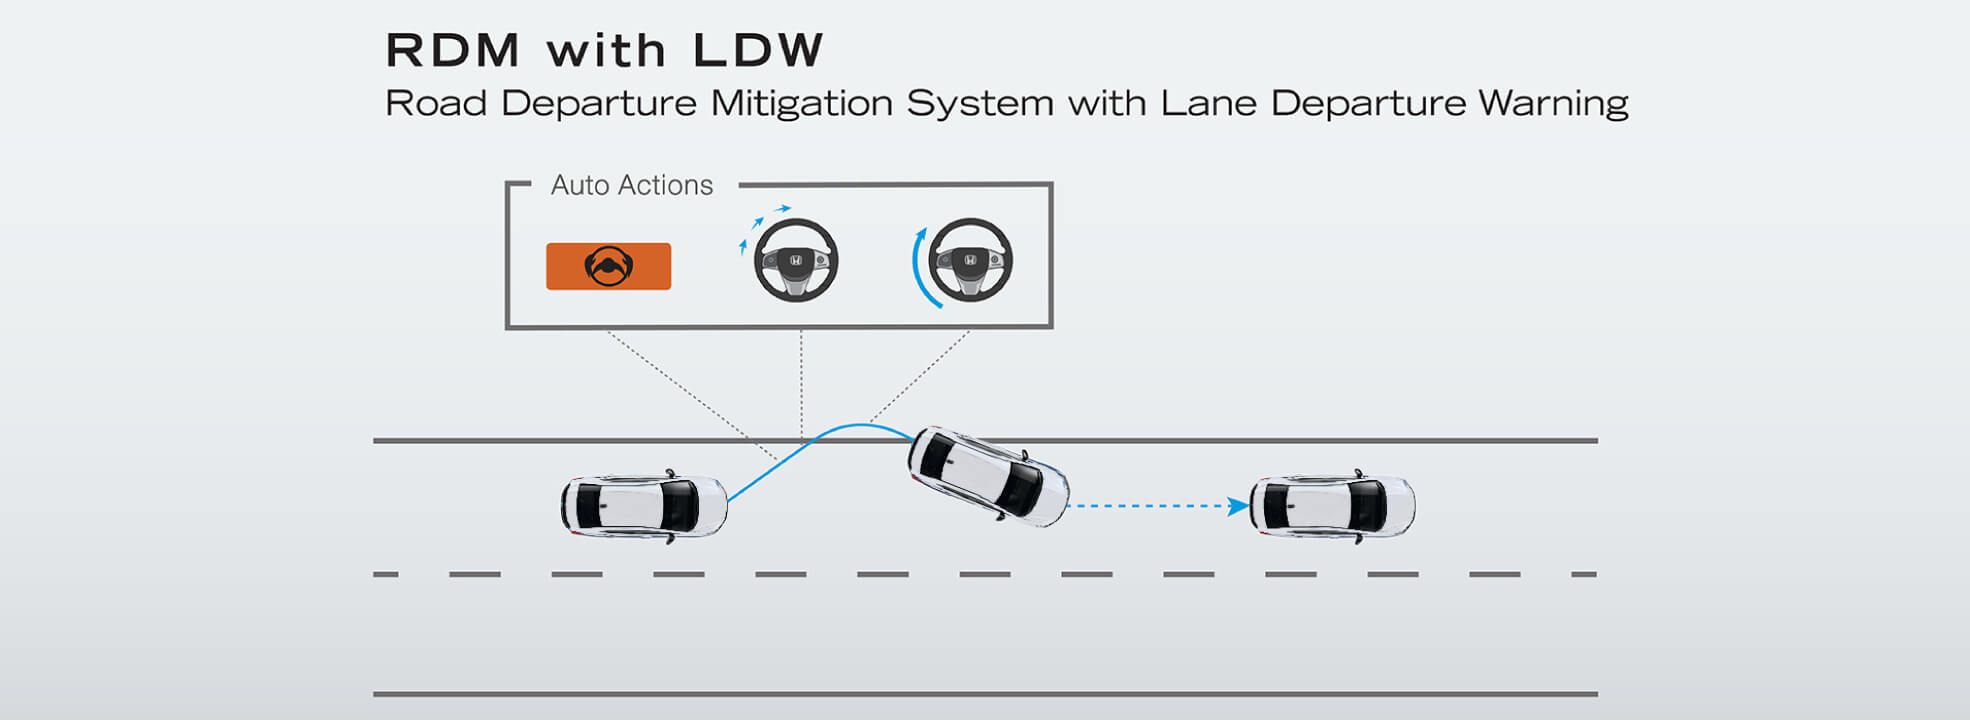 Road Departure Mitigation System with Departure Warning (RDM with LDW) ระบบเตือนและช่วยควบคุม เมื่อรถออกนอกช่องทางเดินรถ